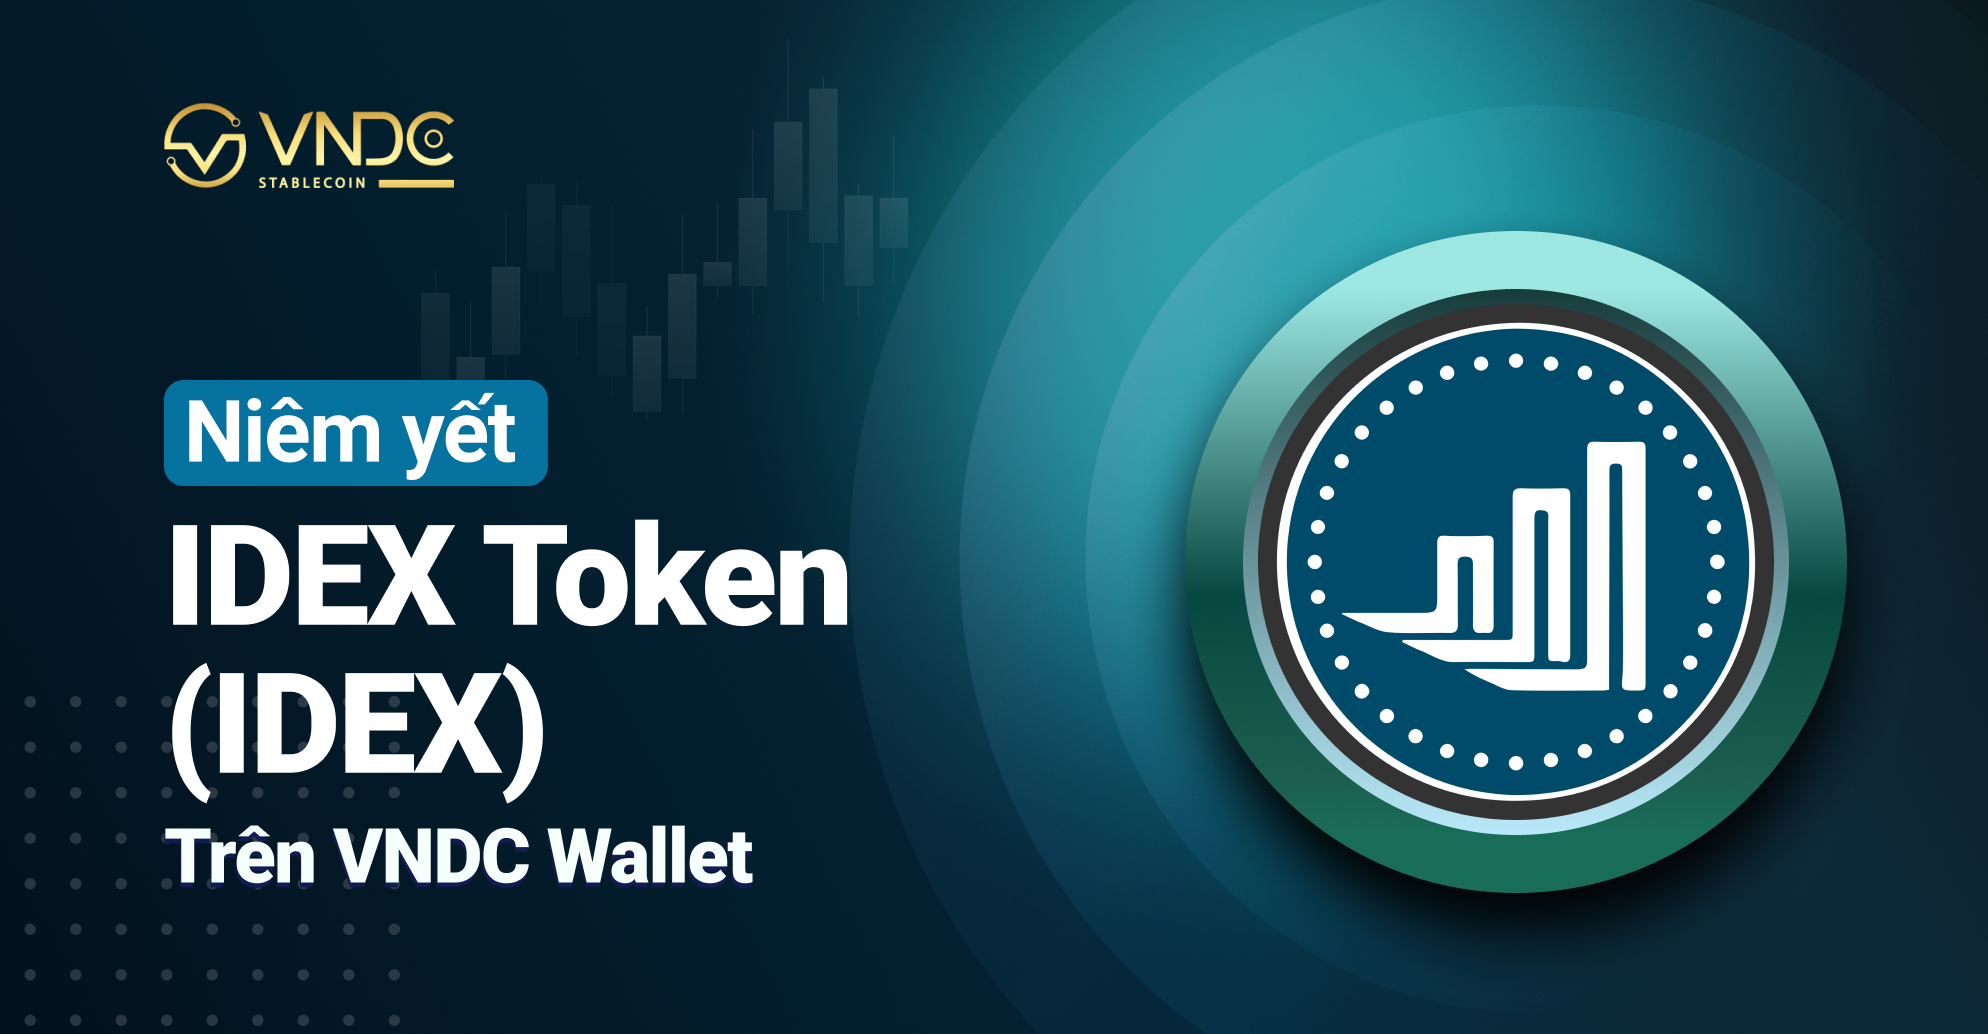 Niêm yết IDEX token (IDEX) trên VNDC Wallet